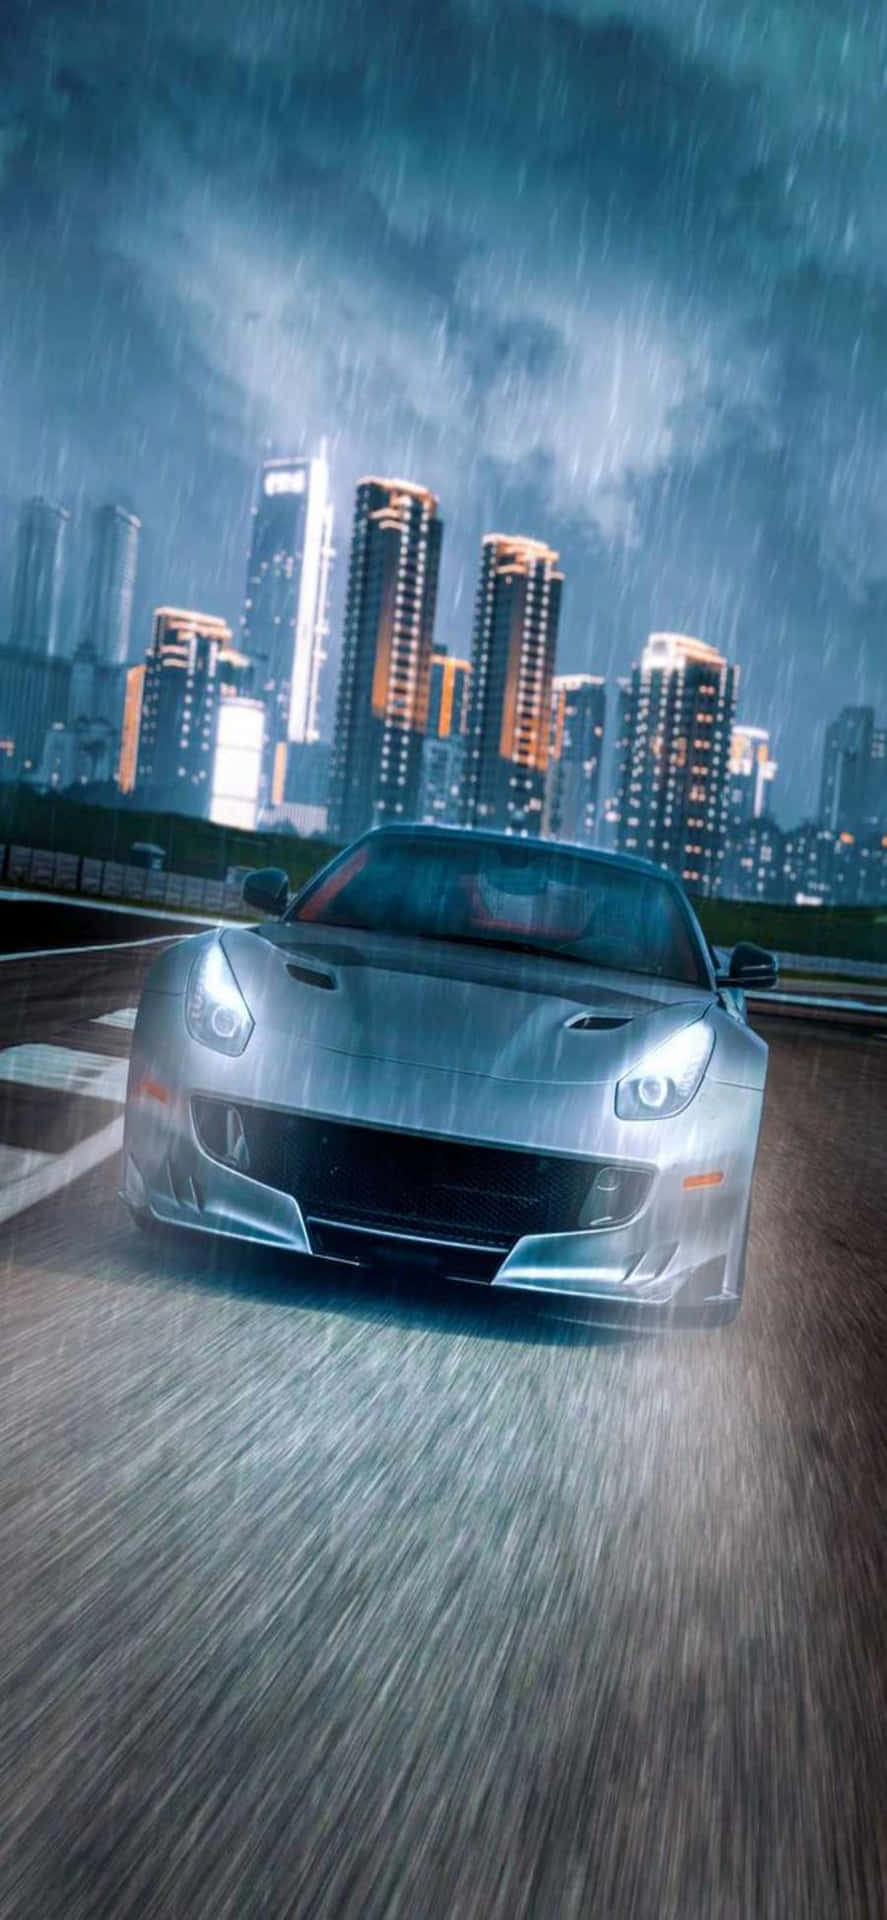 Iphone Xs Max Ferrari Background Ferrari In The Rain At Night